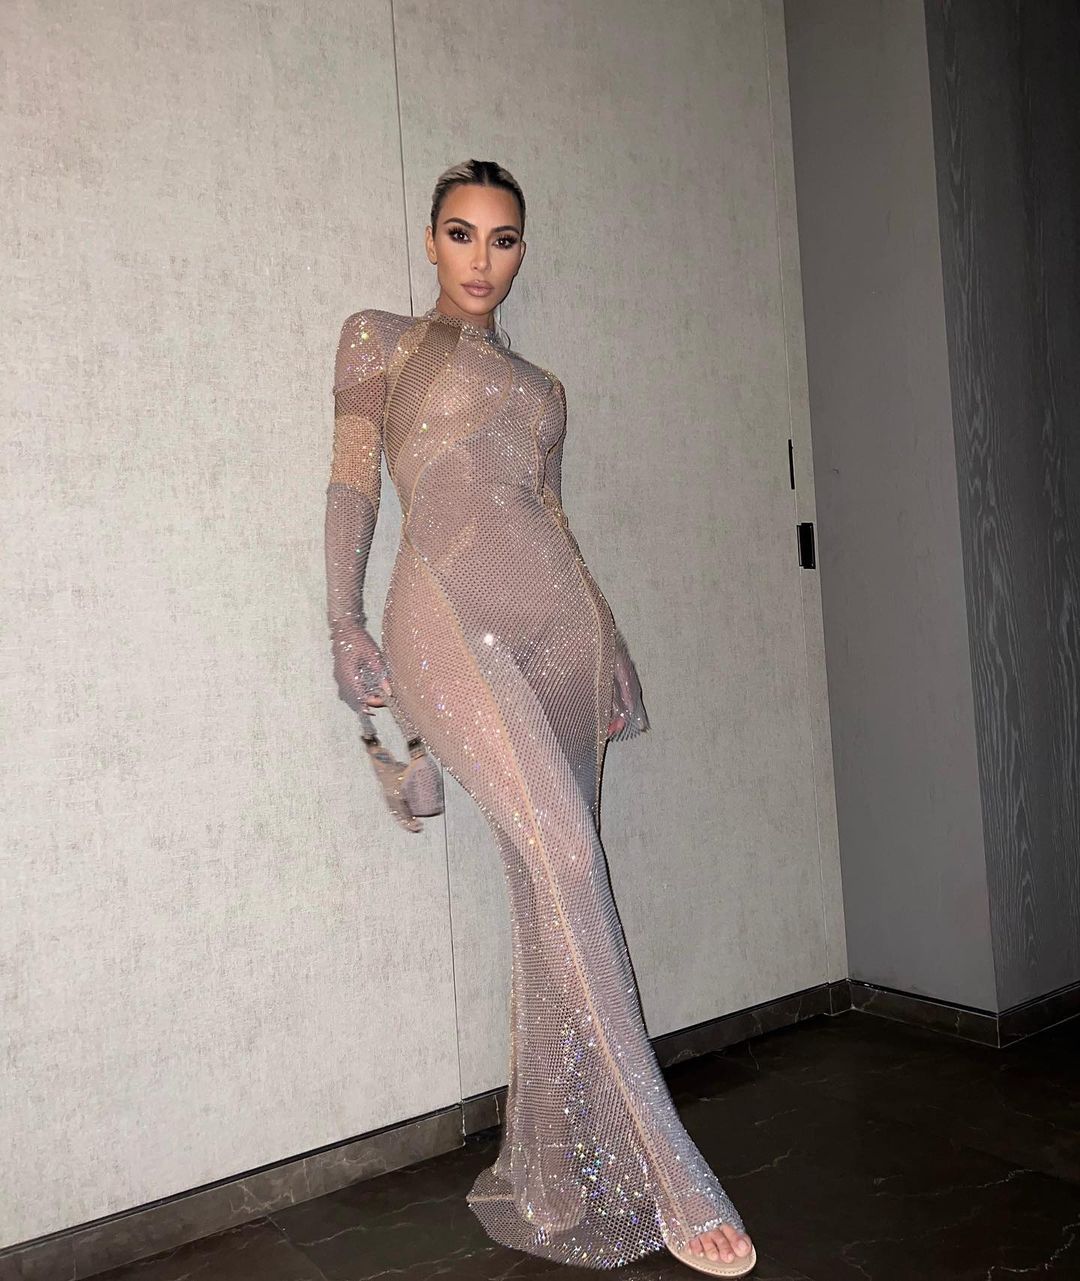 Sexy photo of Kim Kardashian attends the Fendi Show at NYFW